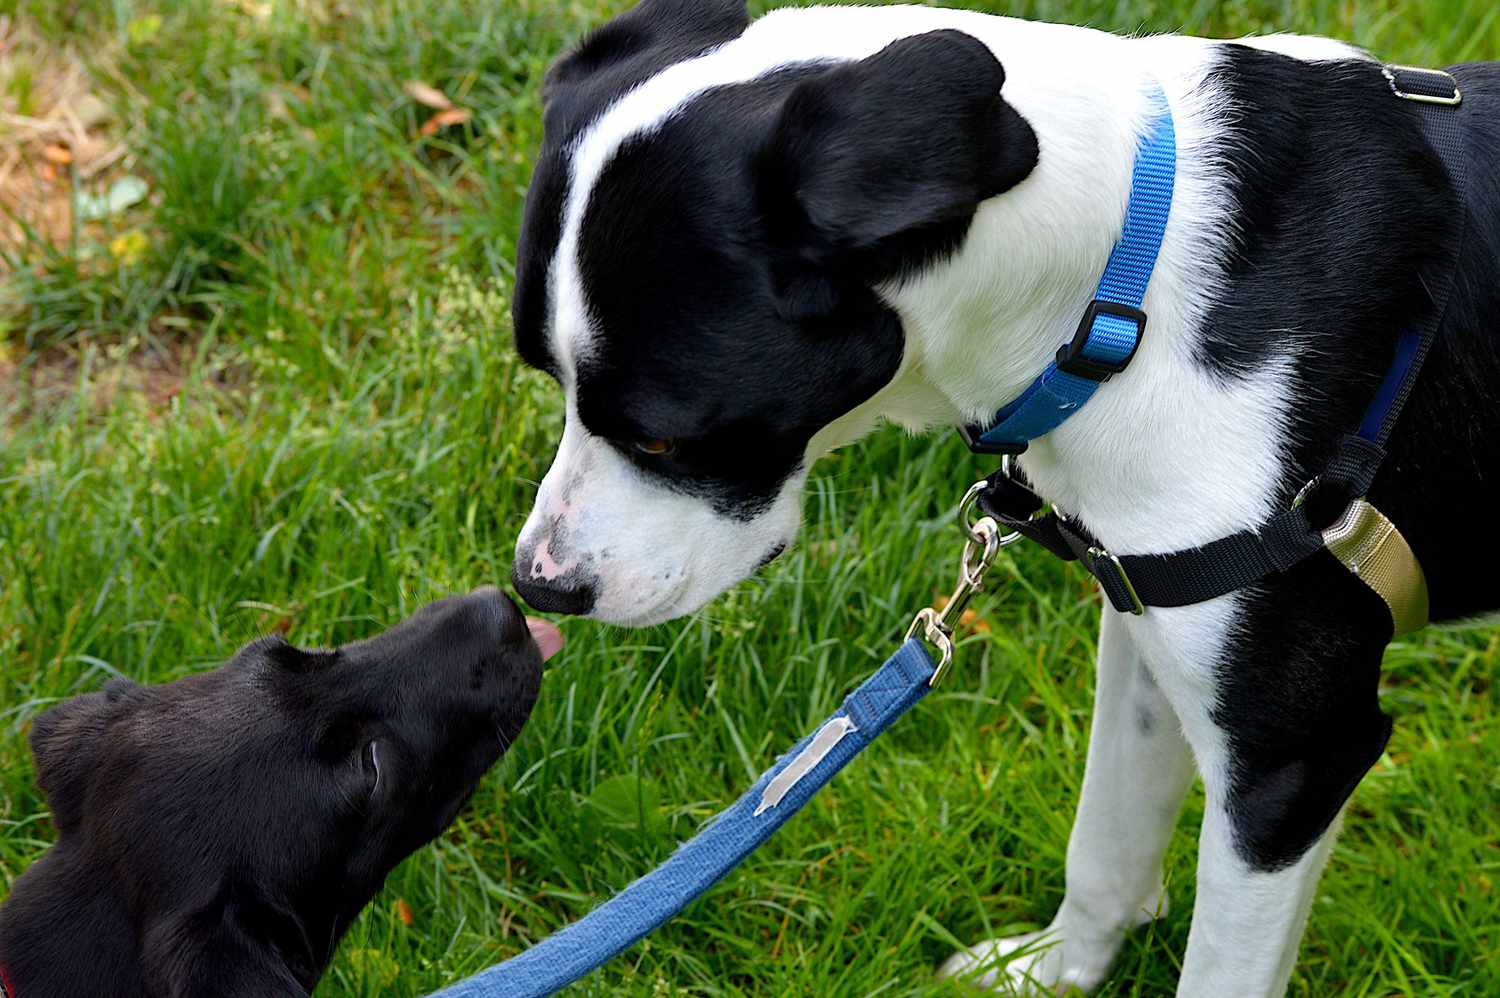 black and white dog sniffs smaller black dog